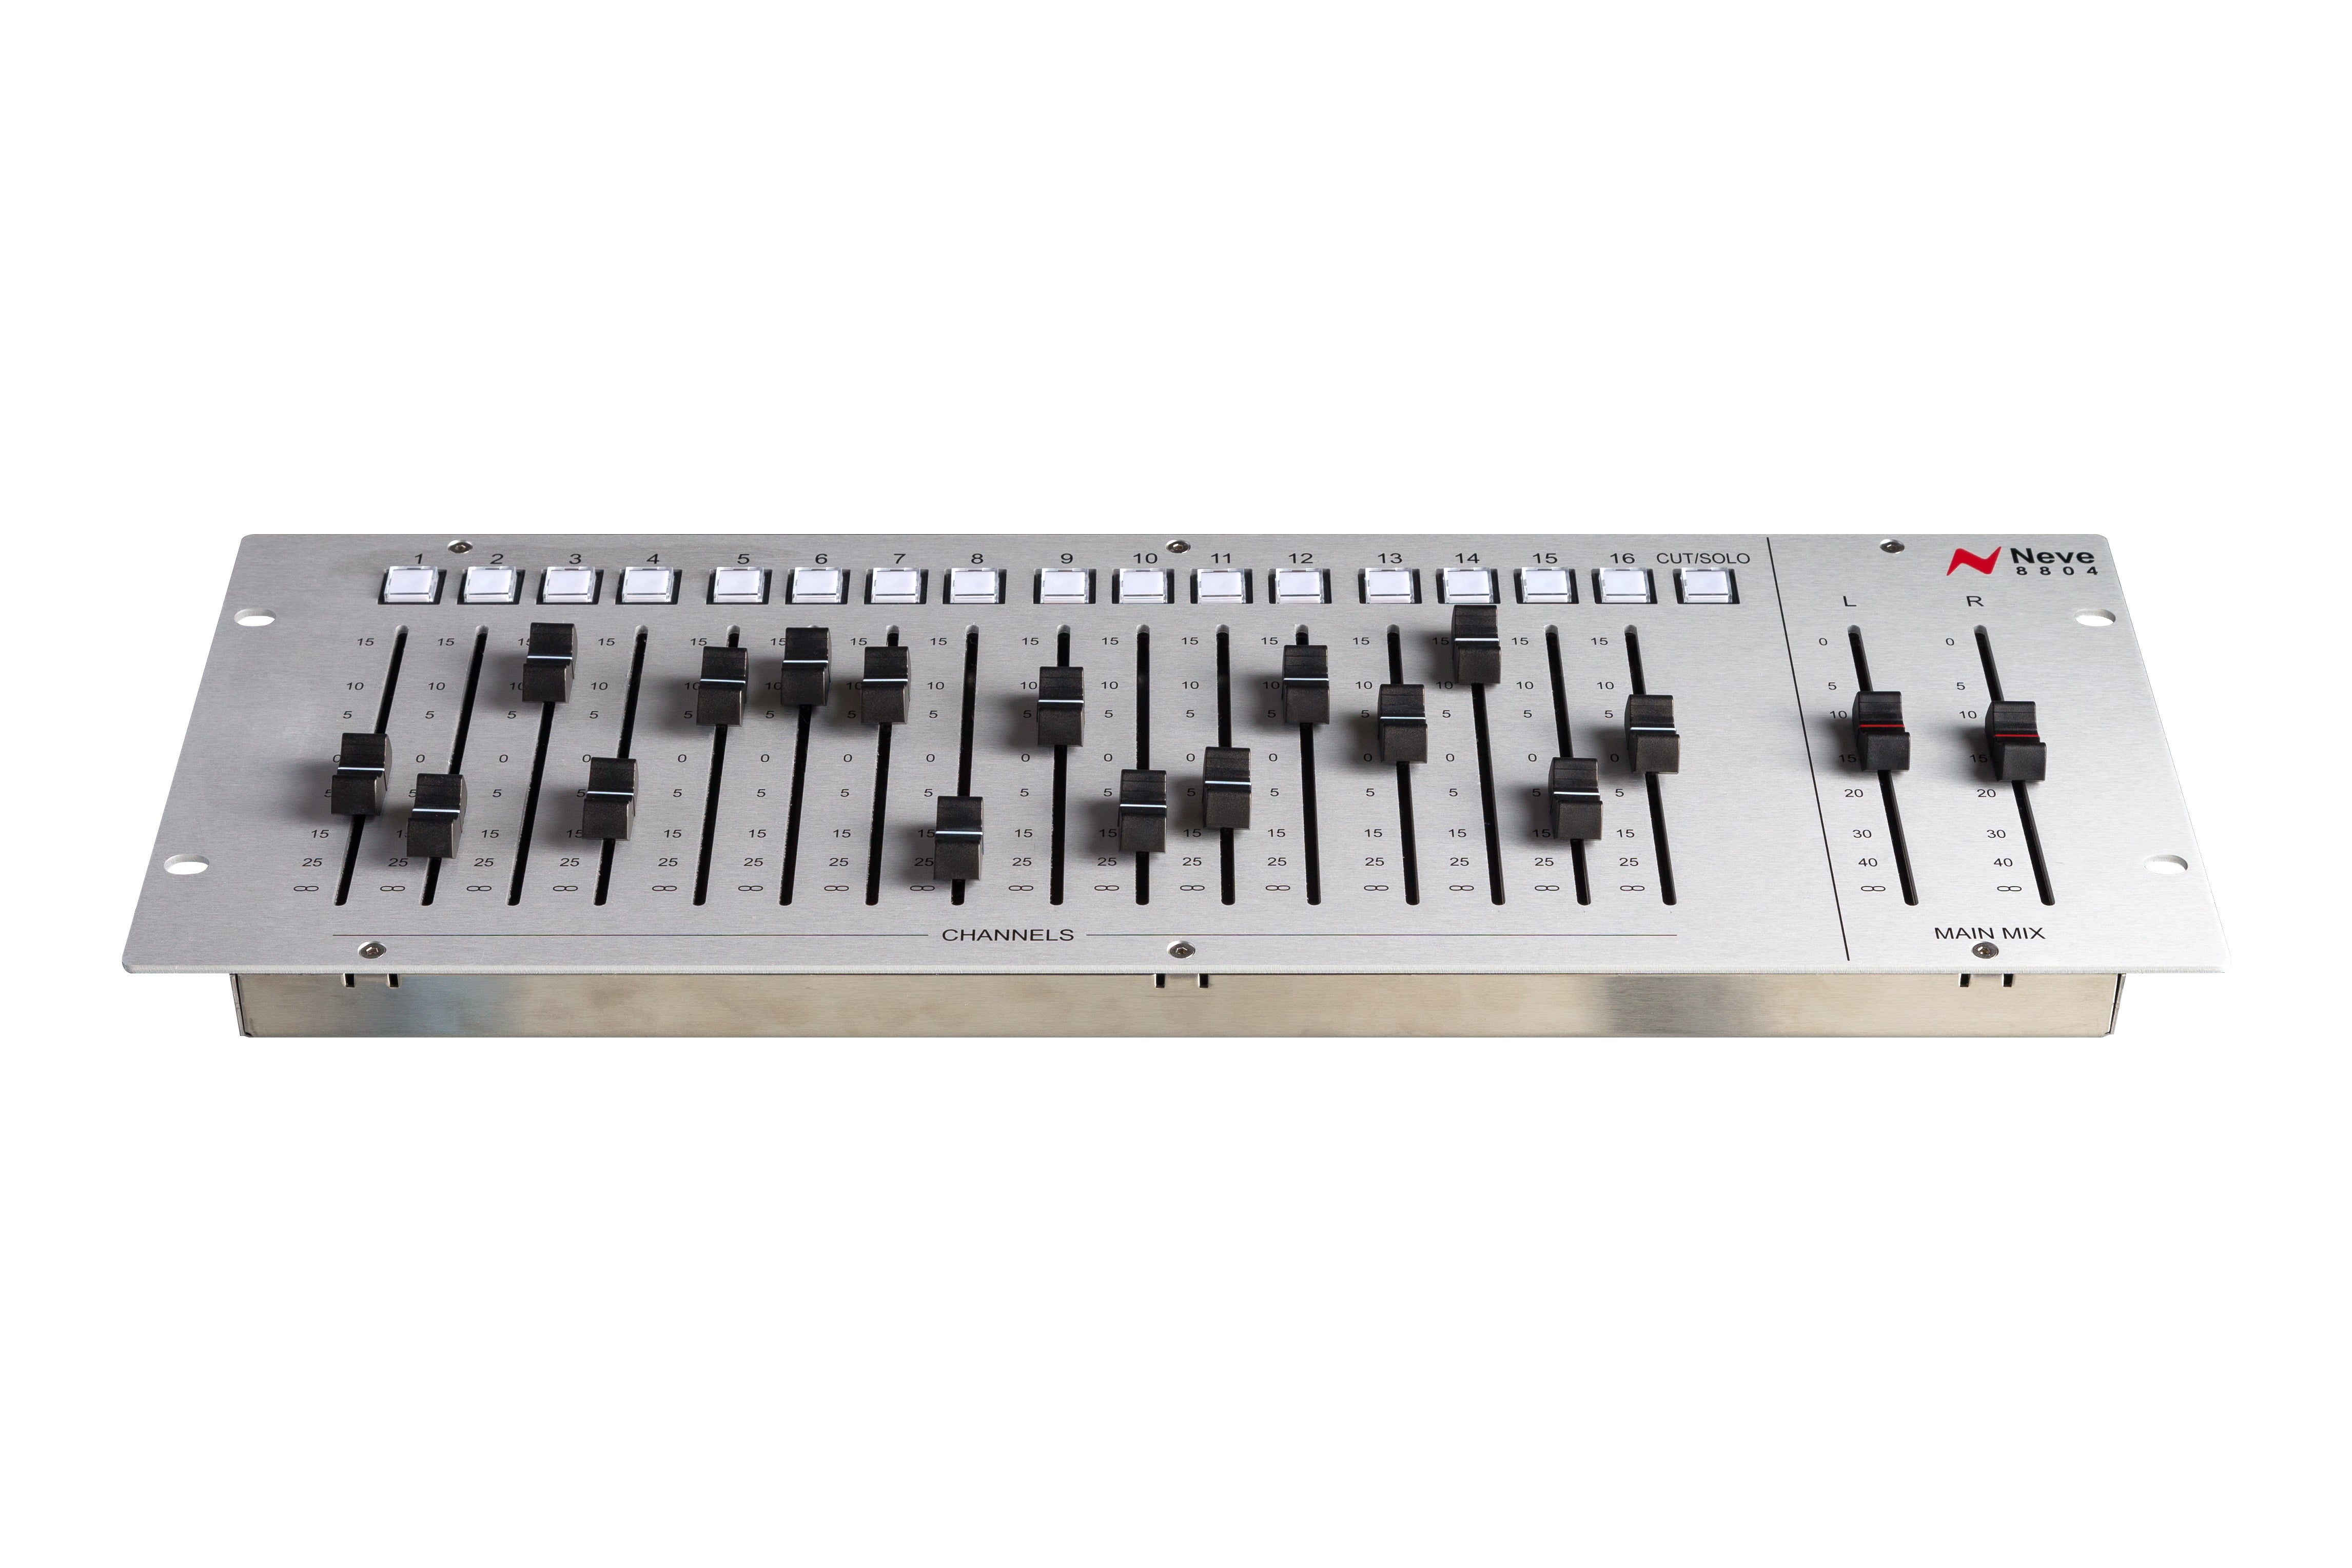 AMS Neve 8804 Fader Pack - Professional Audio Design, Inc